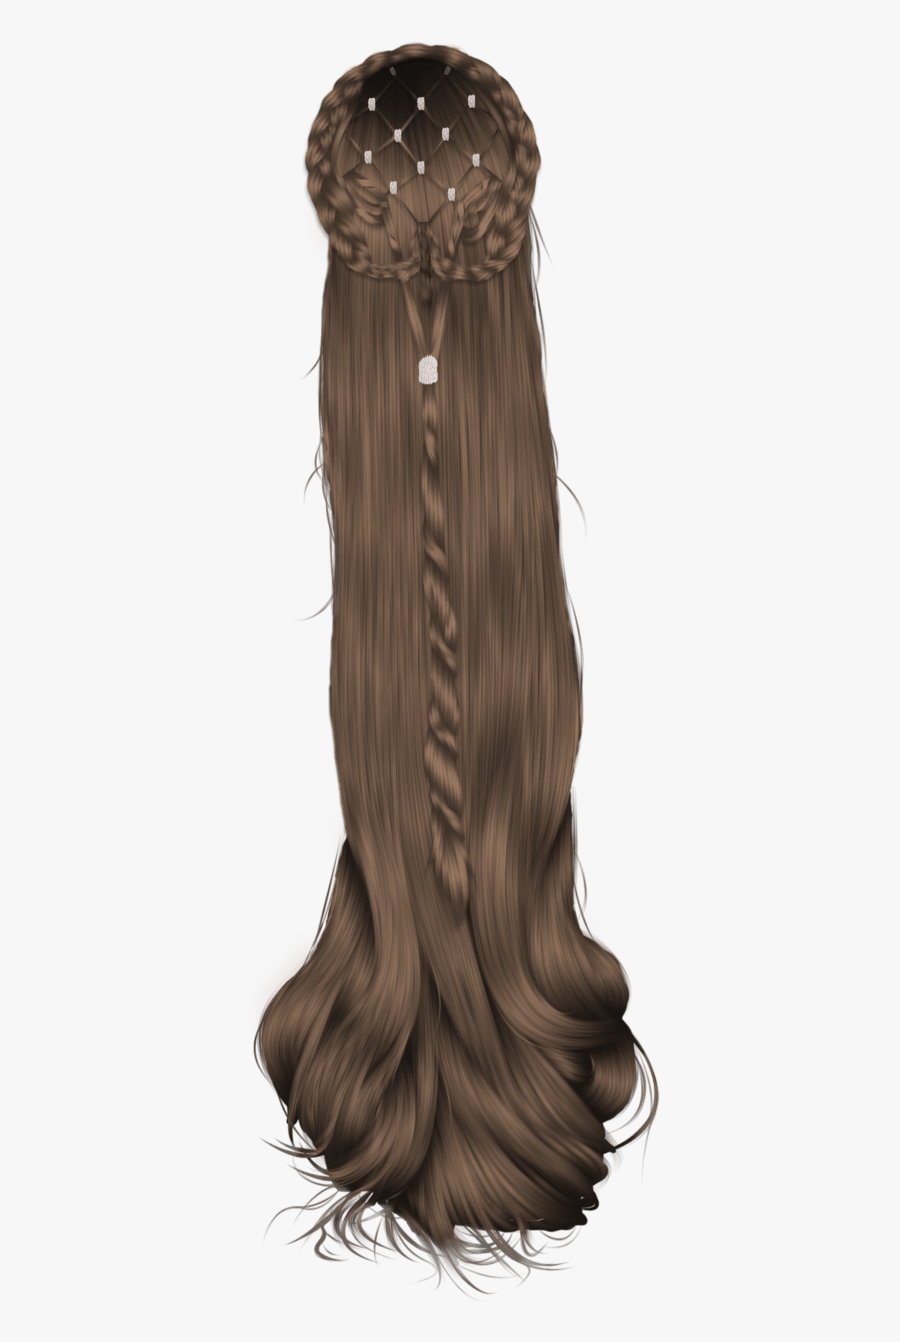 Clip Art Afro Wig Image Pictures - Princess Hair Png, Transparent Clipart